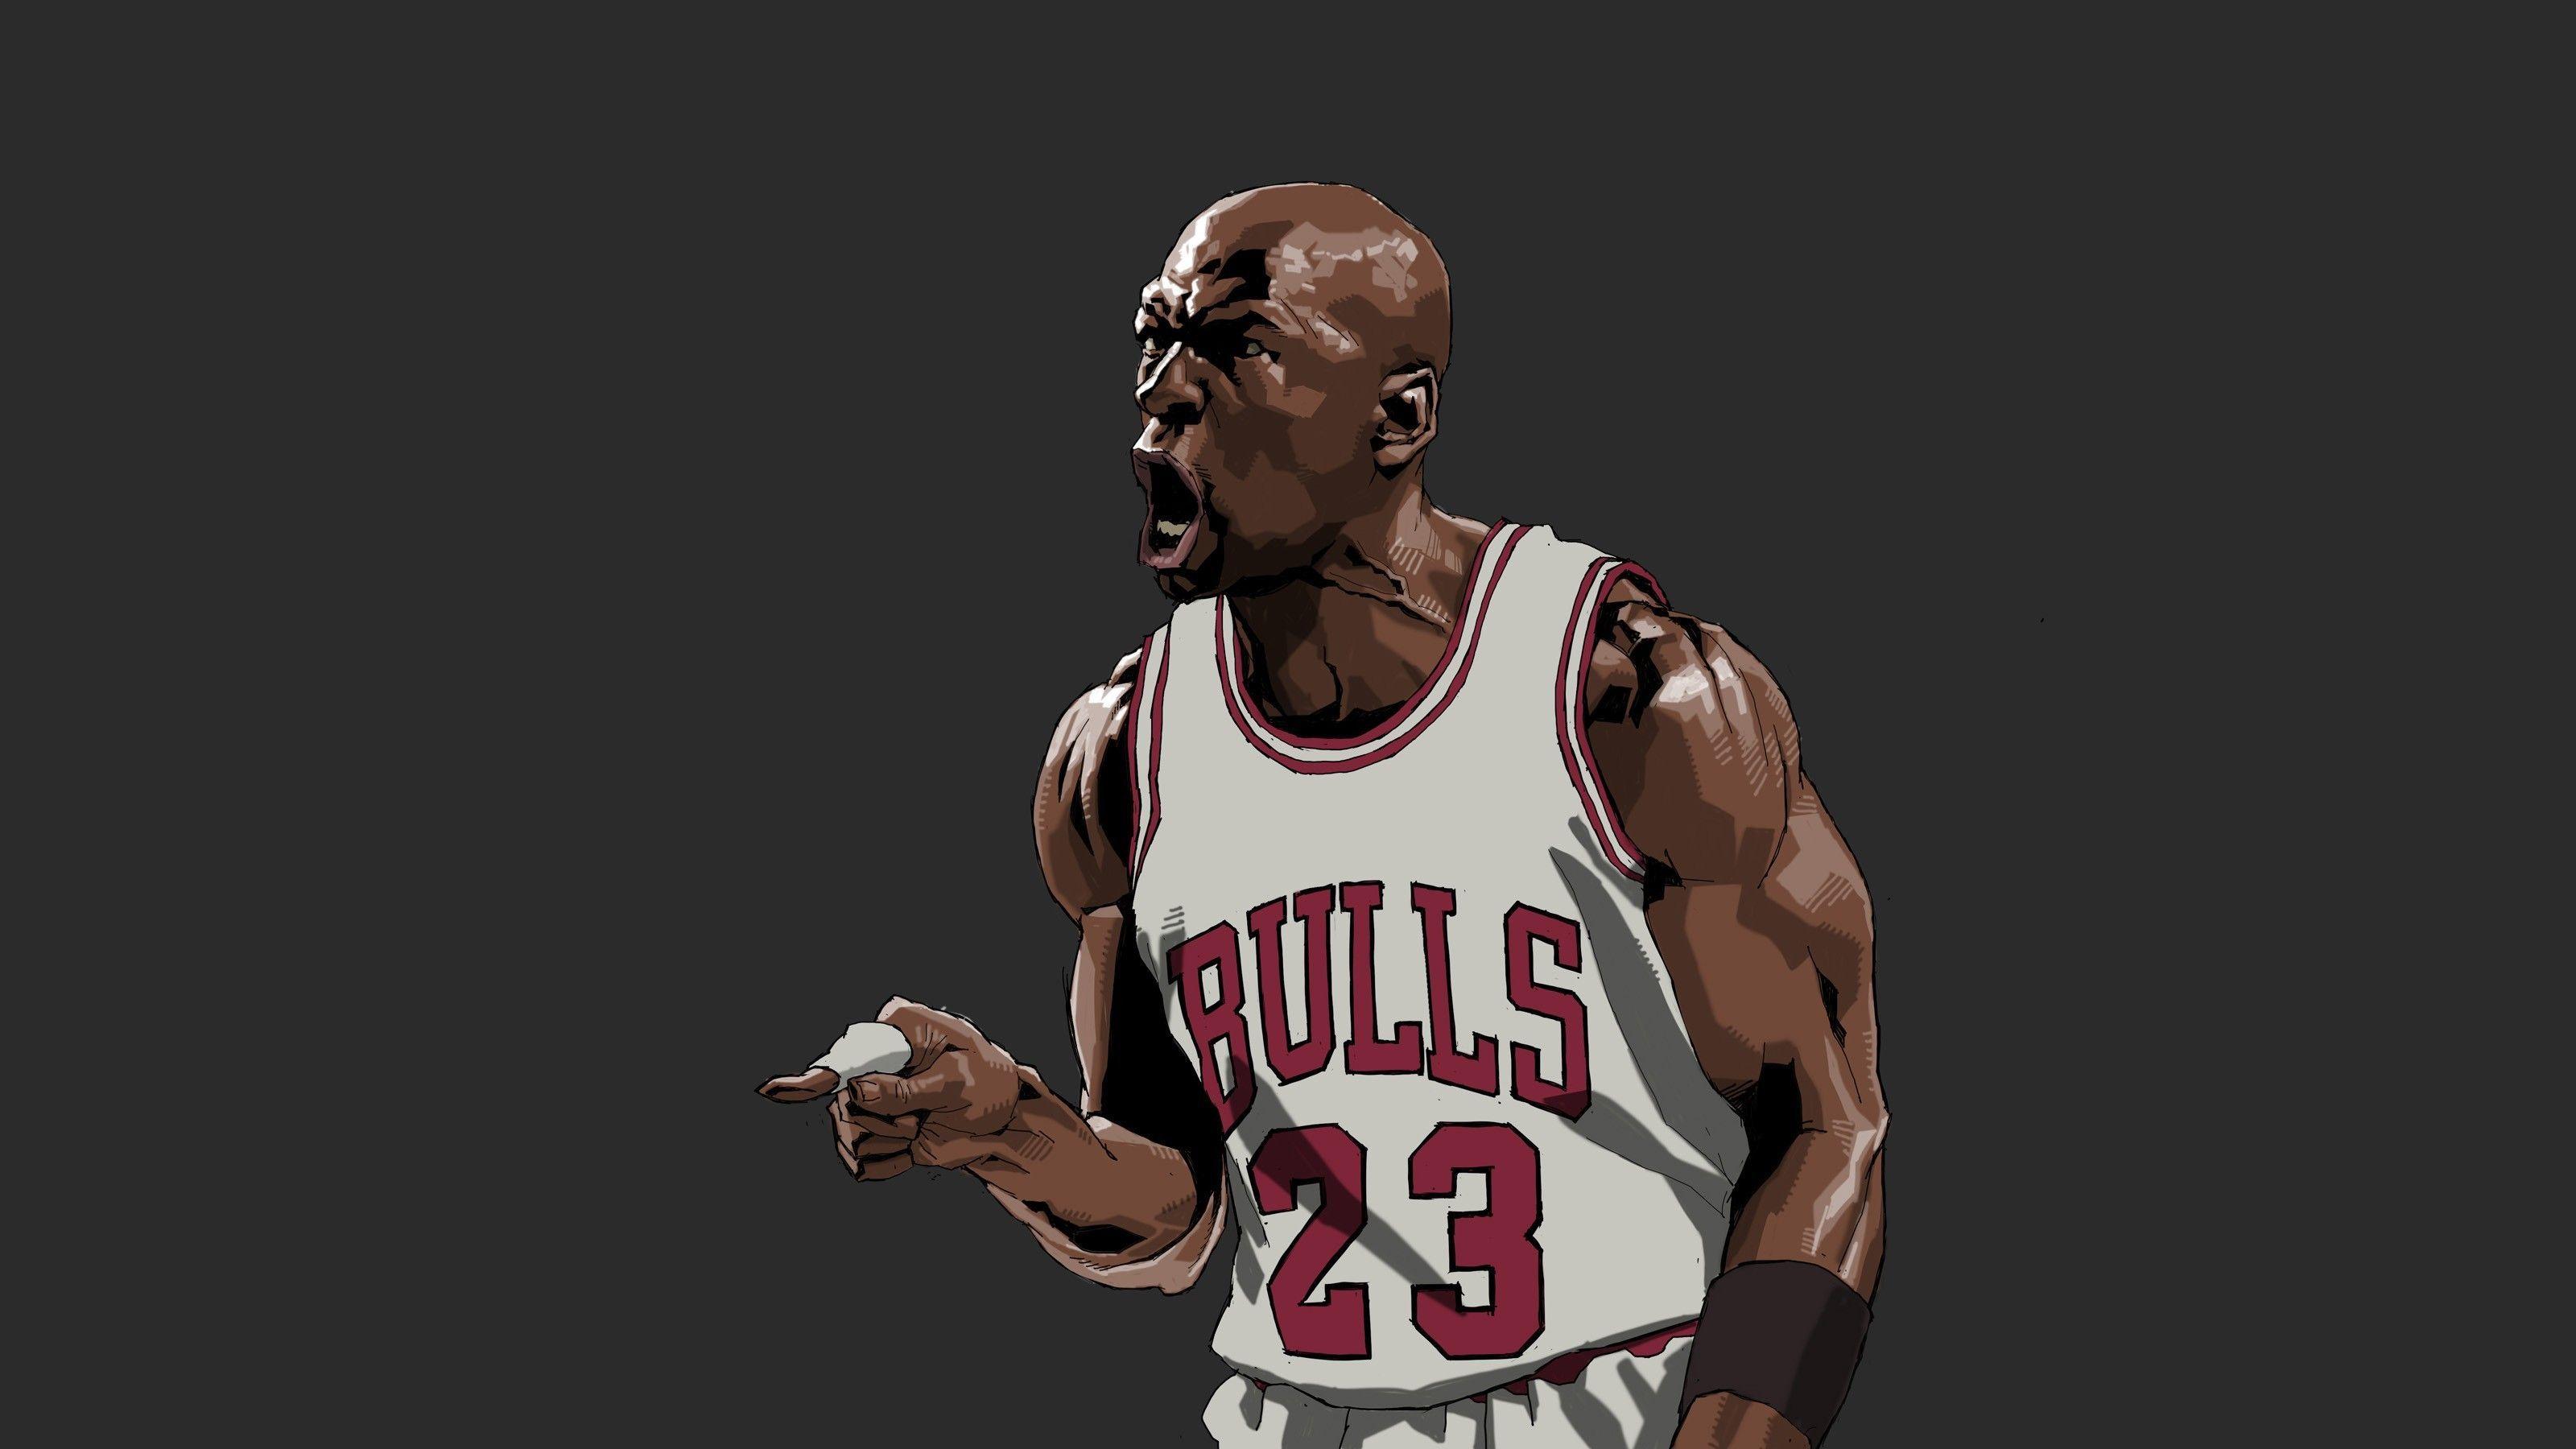 Michael Jordan Wallpaper Desktop Background Ox. Awesomeness